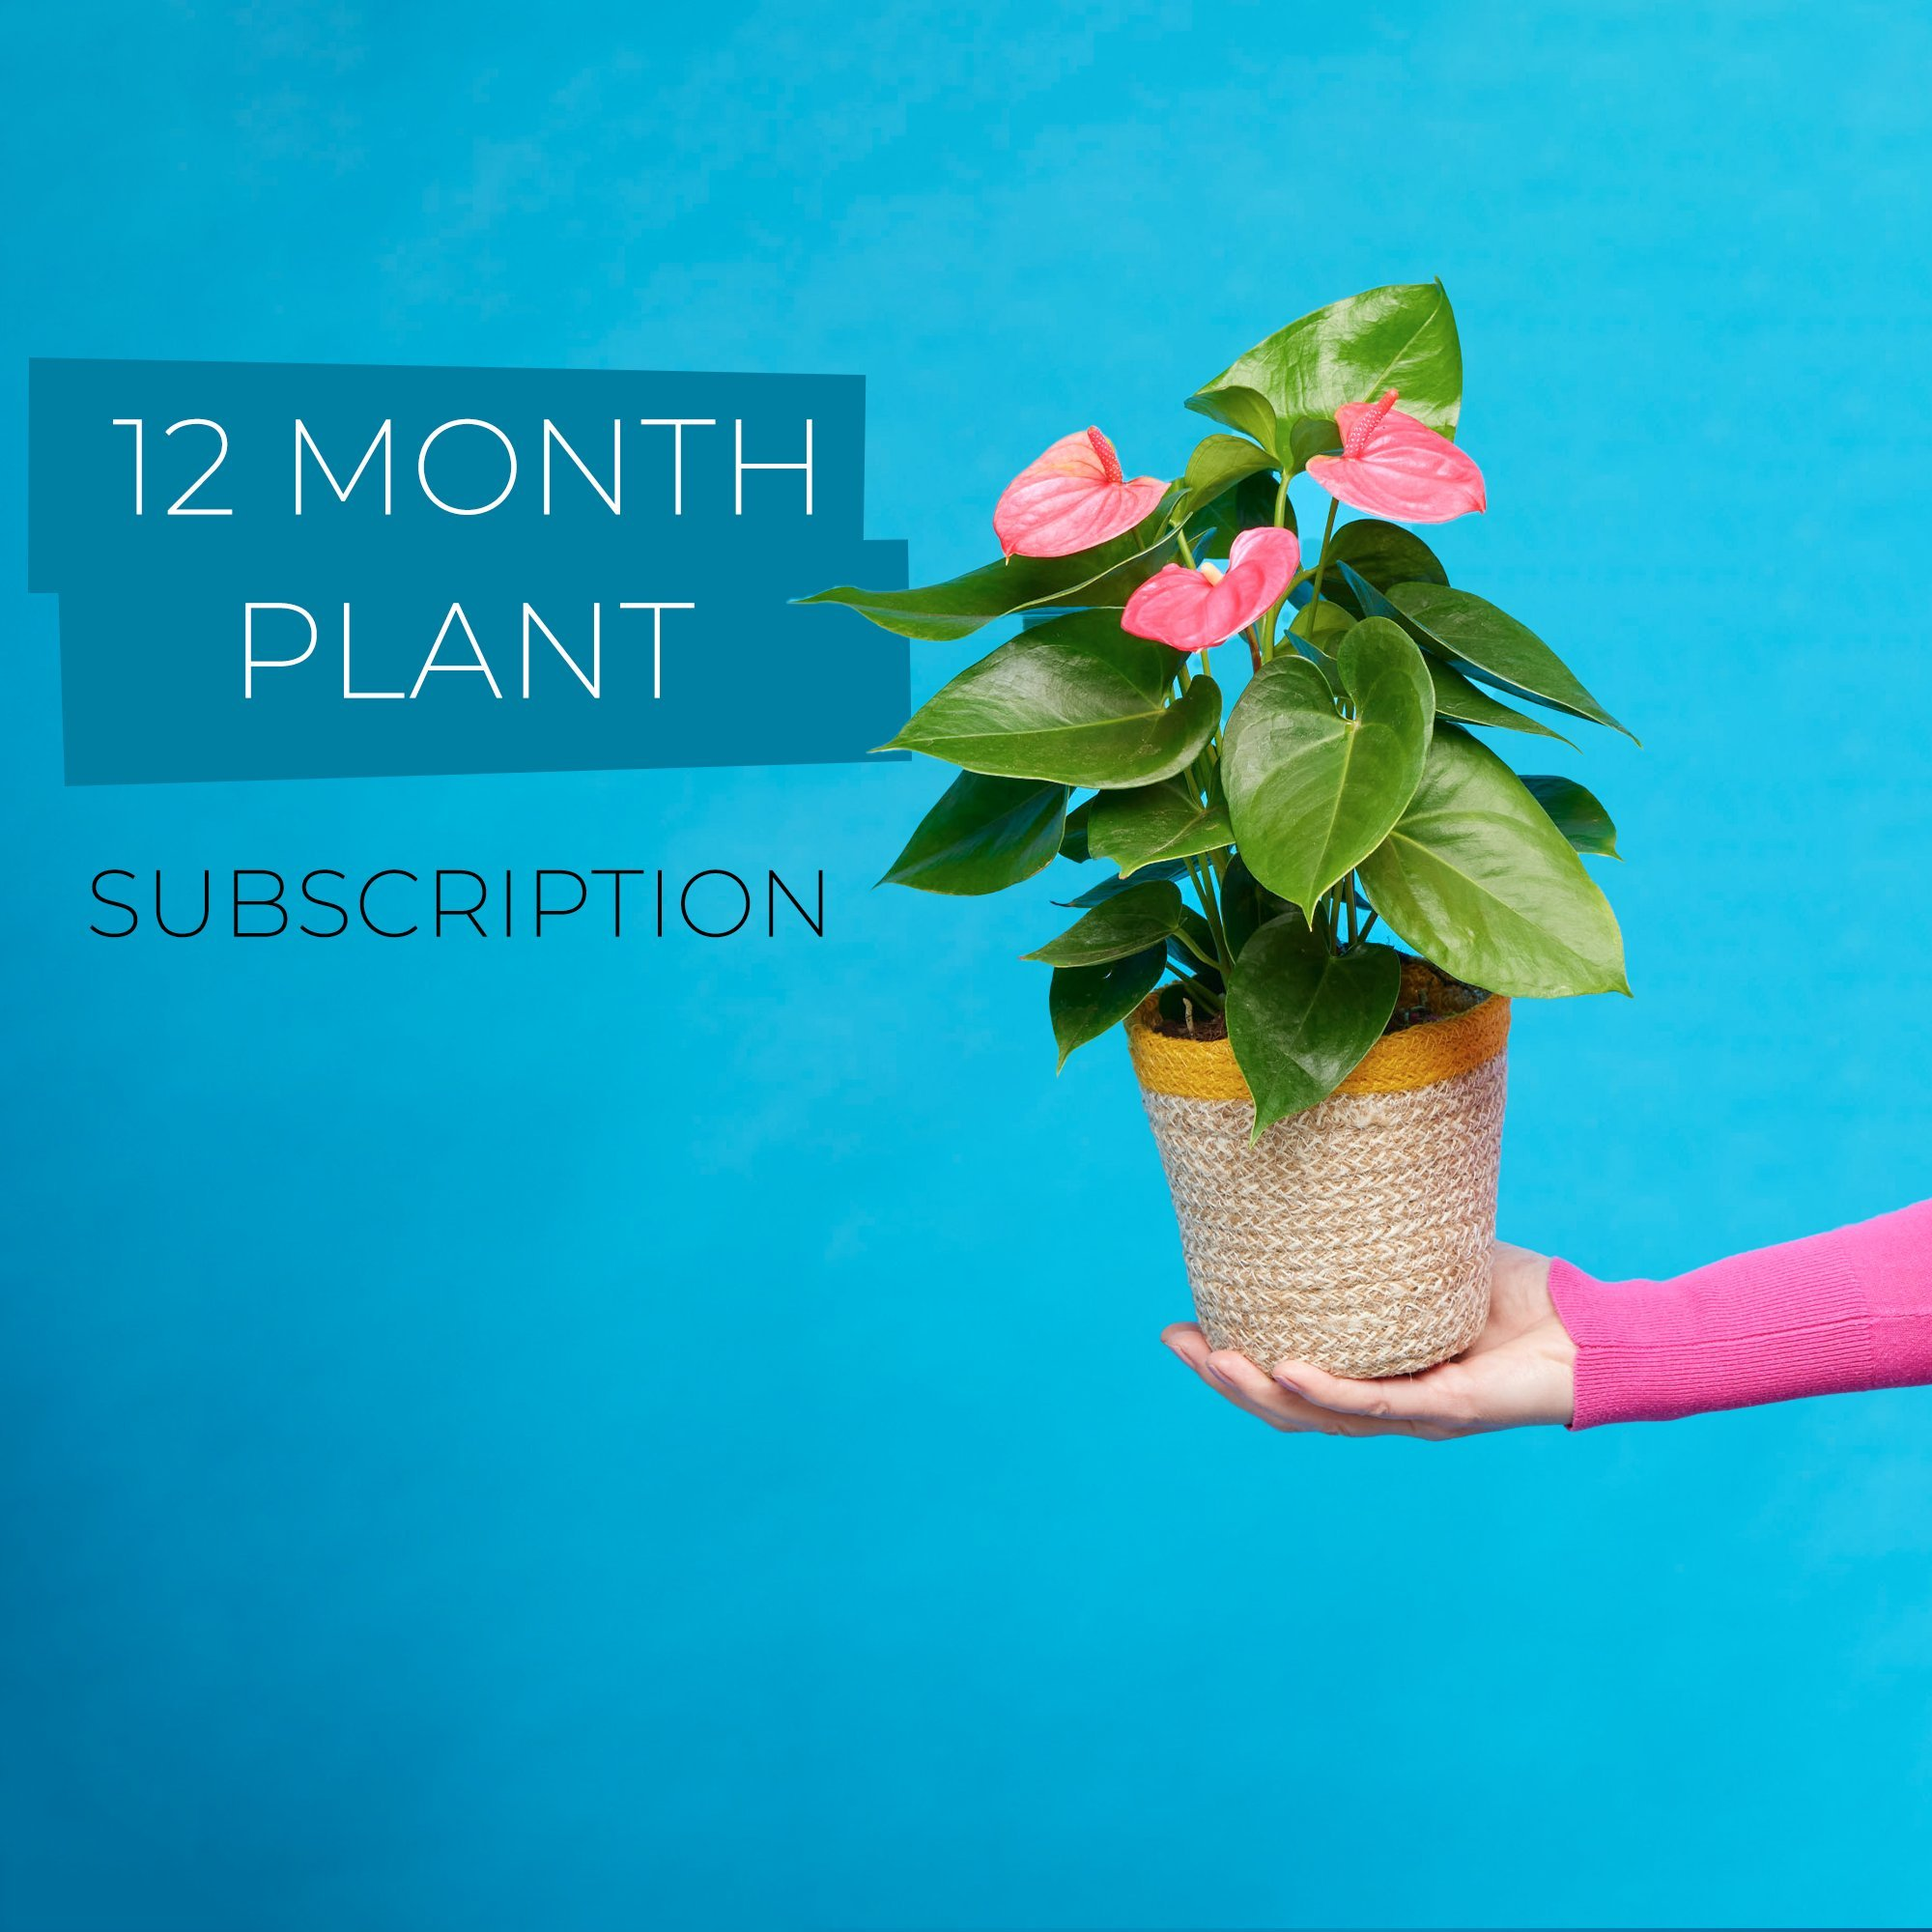 12 Month Plant Subscription image